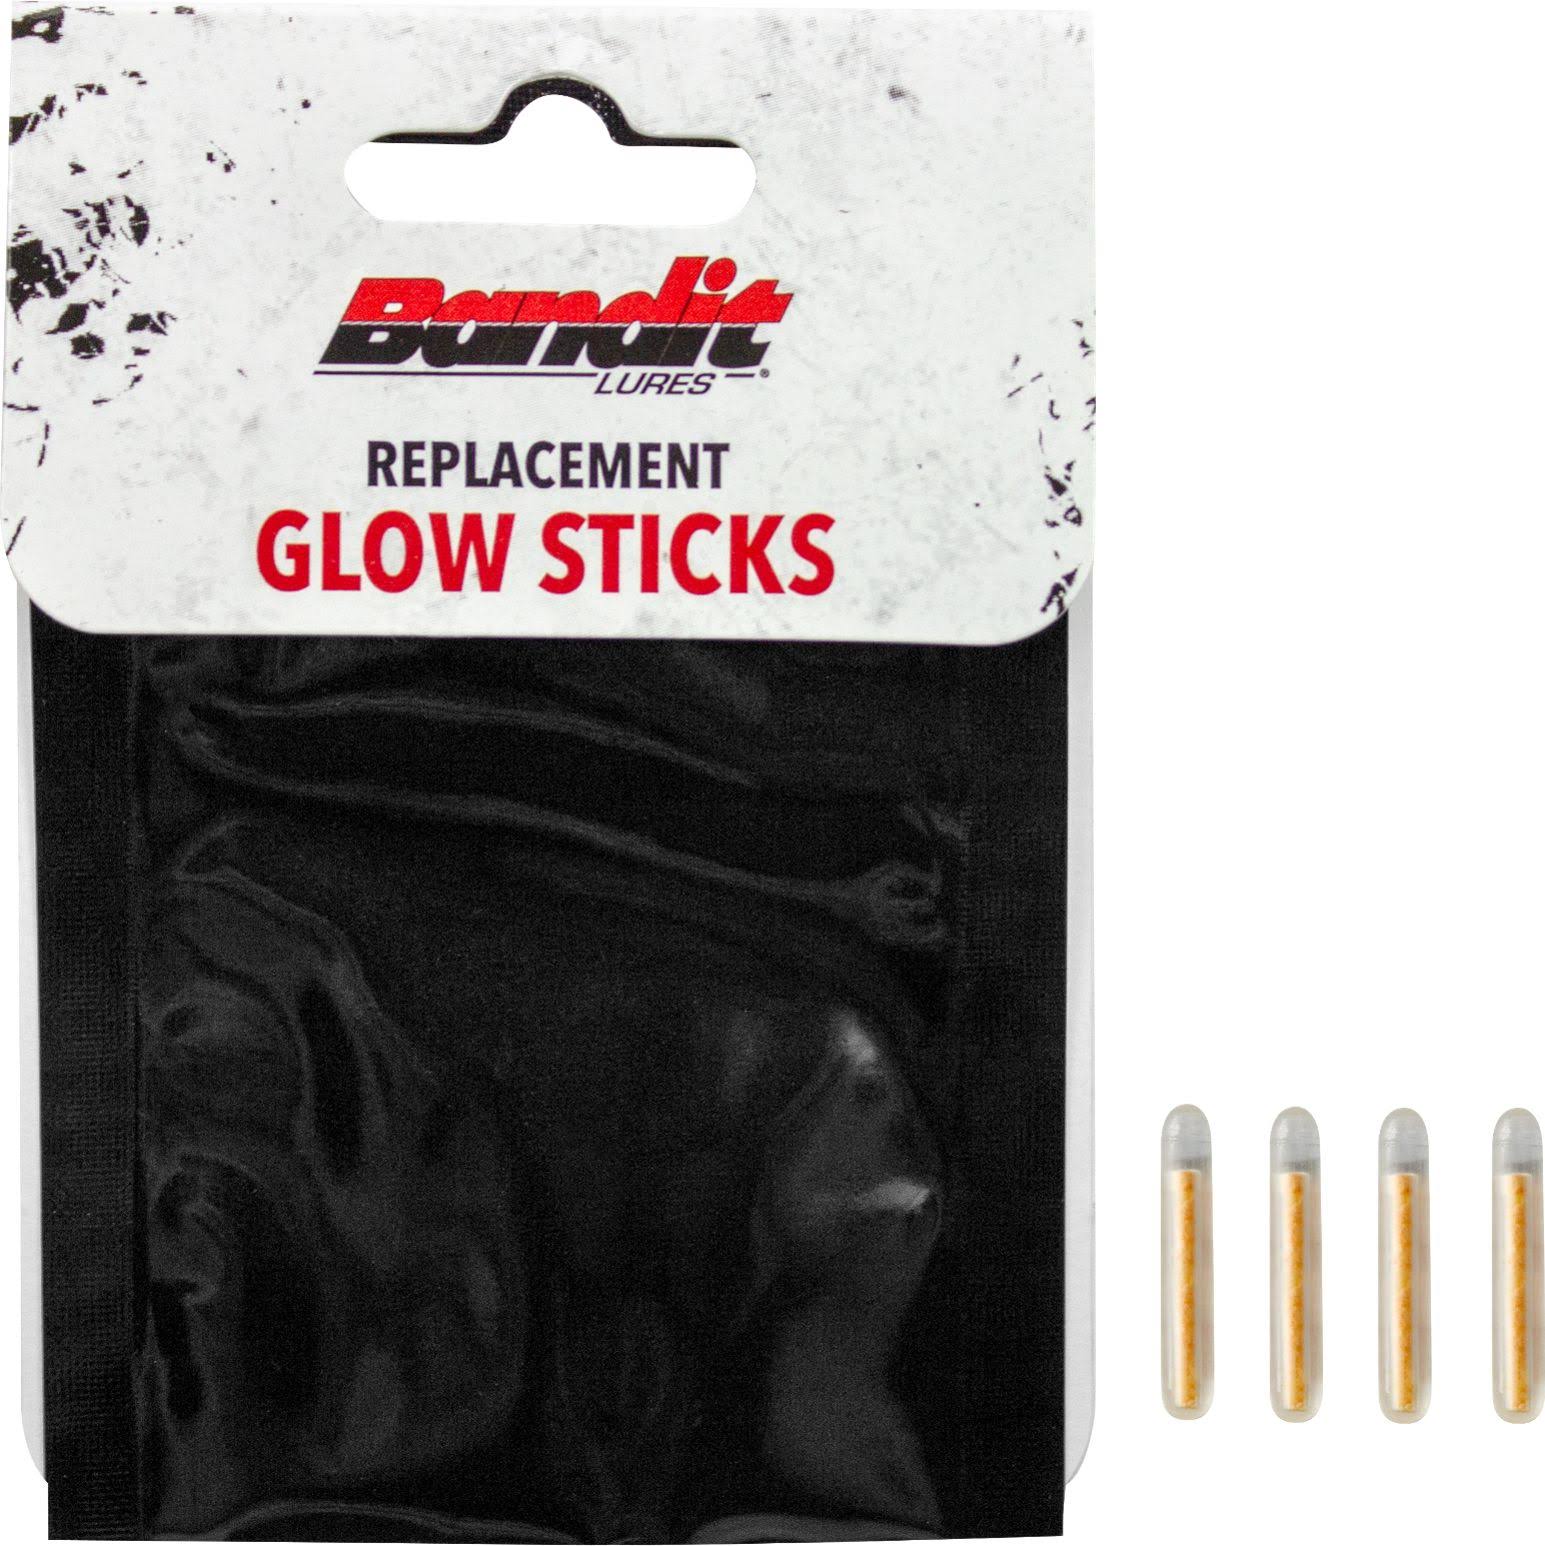 Bandit Replacement Glow Sticks